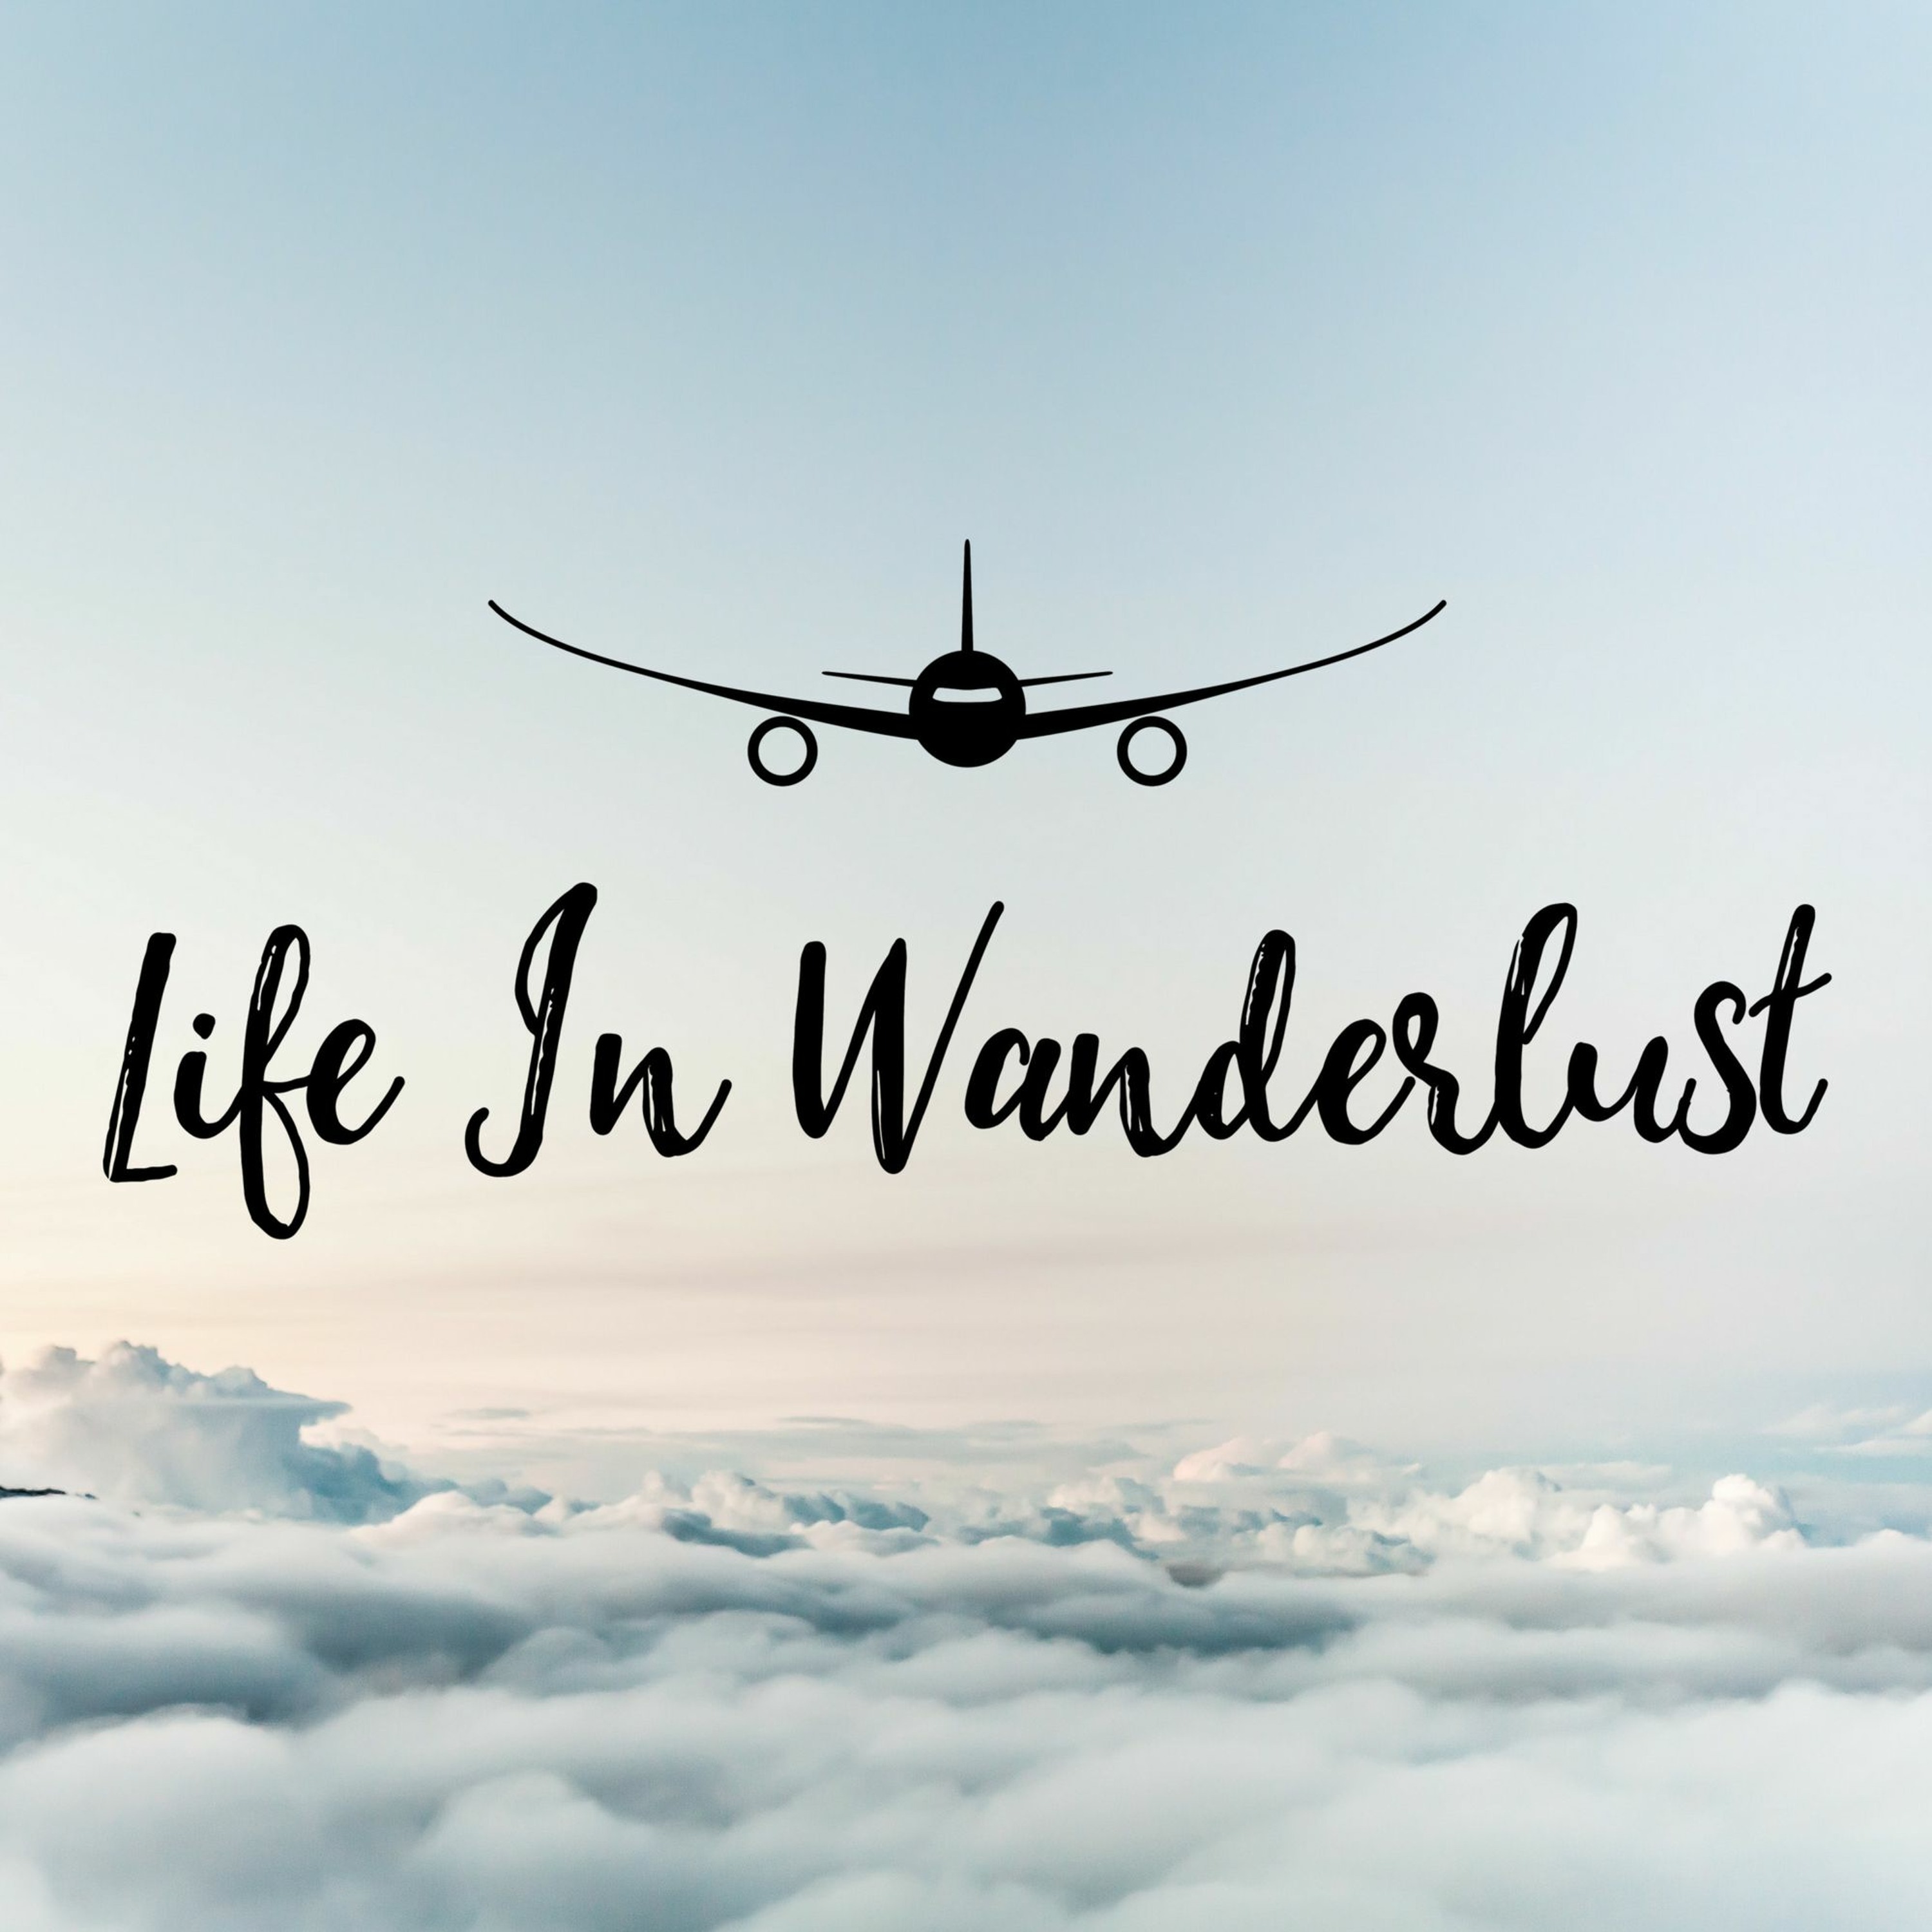 Flying my life. AK - wanderlust. Mellowdy wanderlust. Life in wanderlust. Пес AK wanderlust.